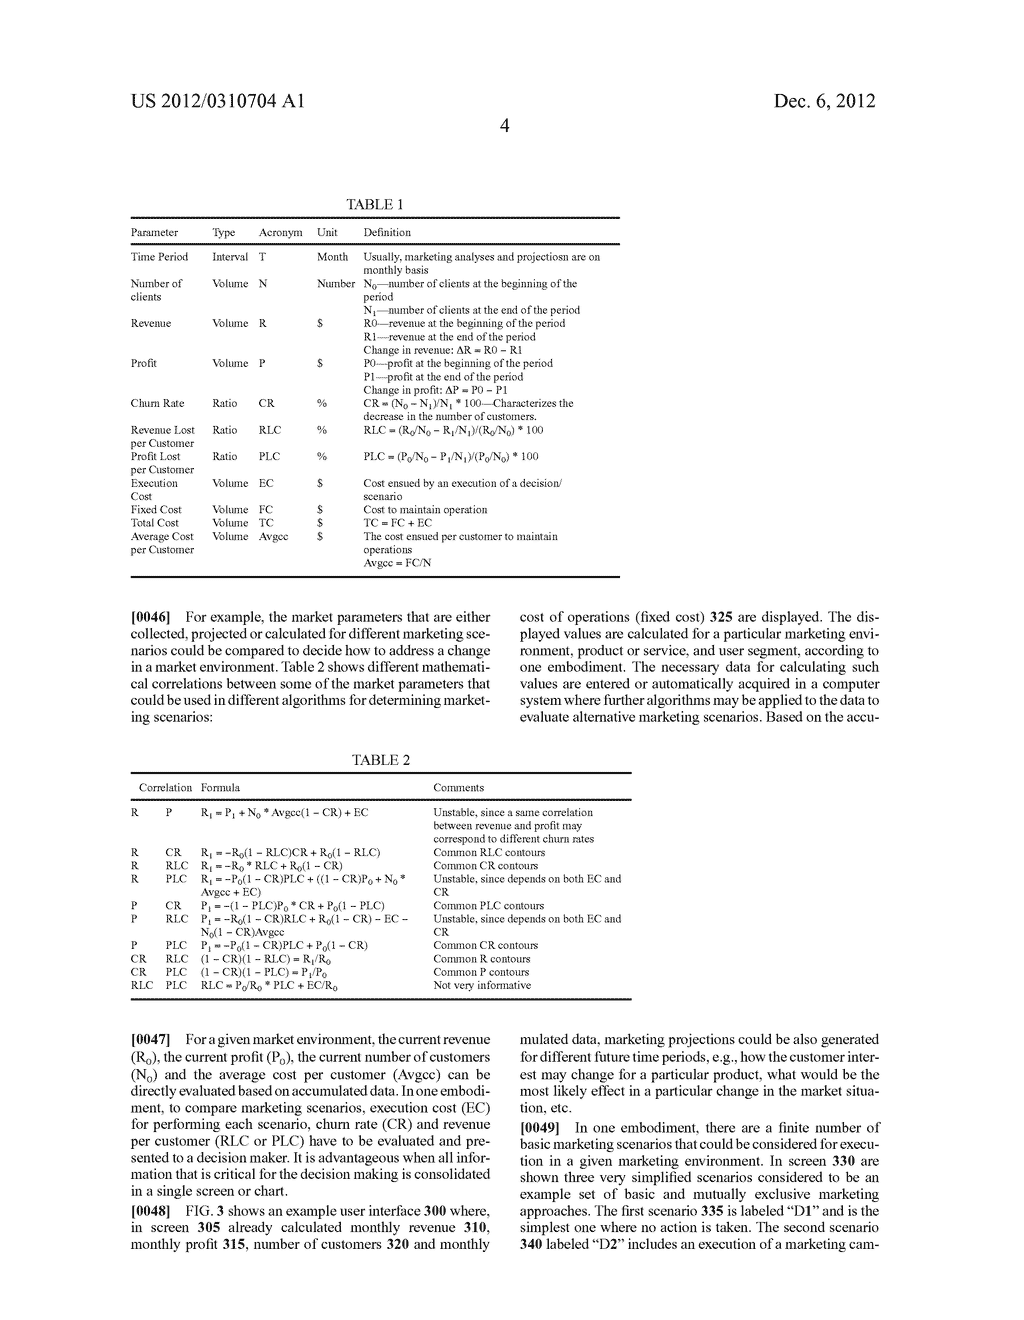 COMPUTING MARKETING SCENARIOS BASED ON MARKET CHARACTERISTICS - diagram, schematic, and image 18